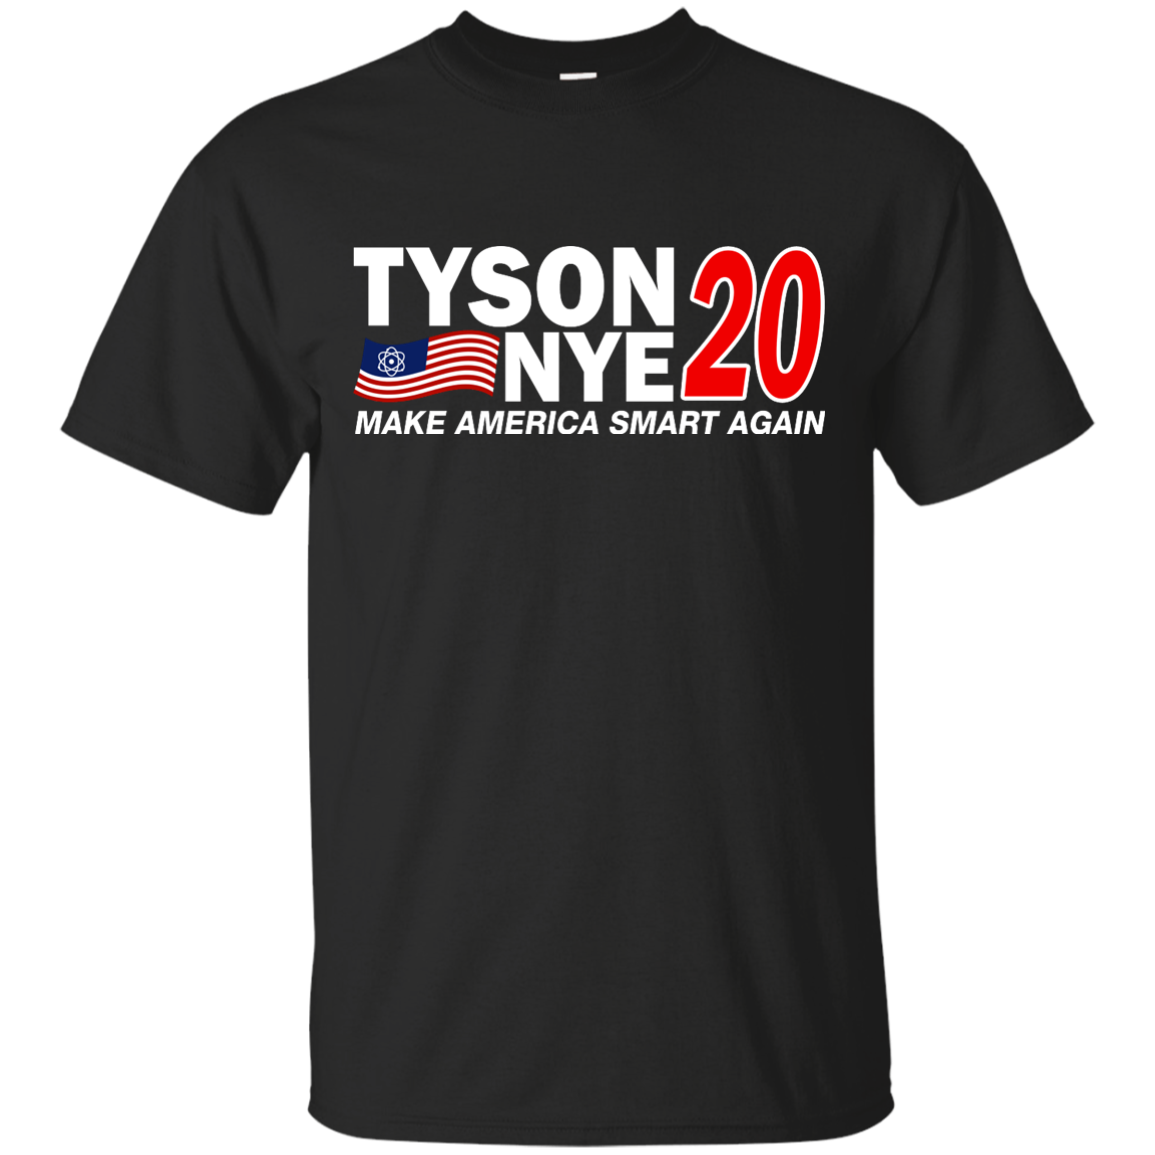 Tyson Nye 2020 Shirt - Make America Smart Again